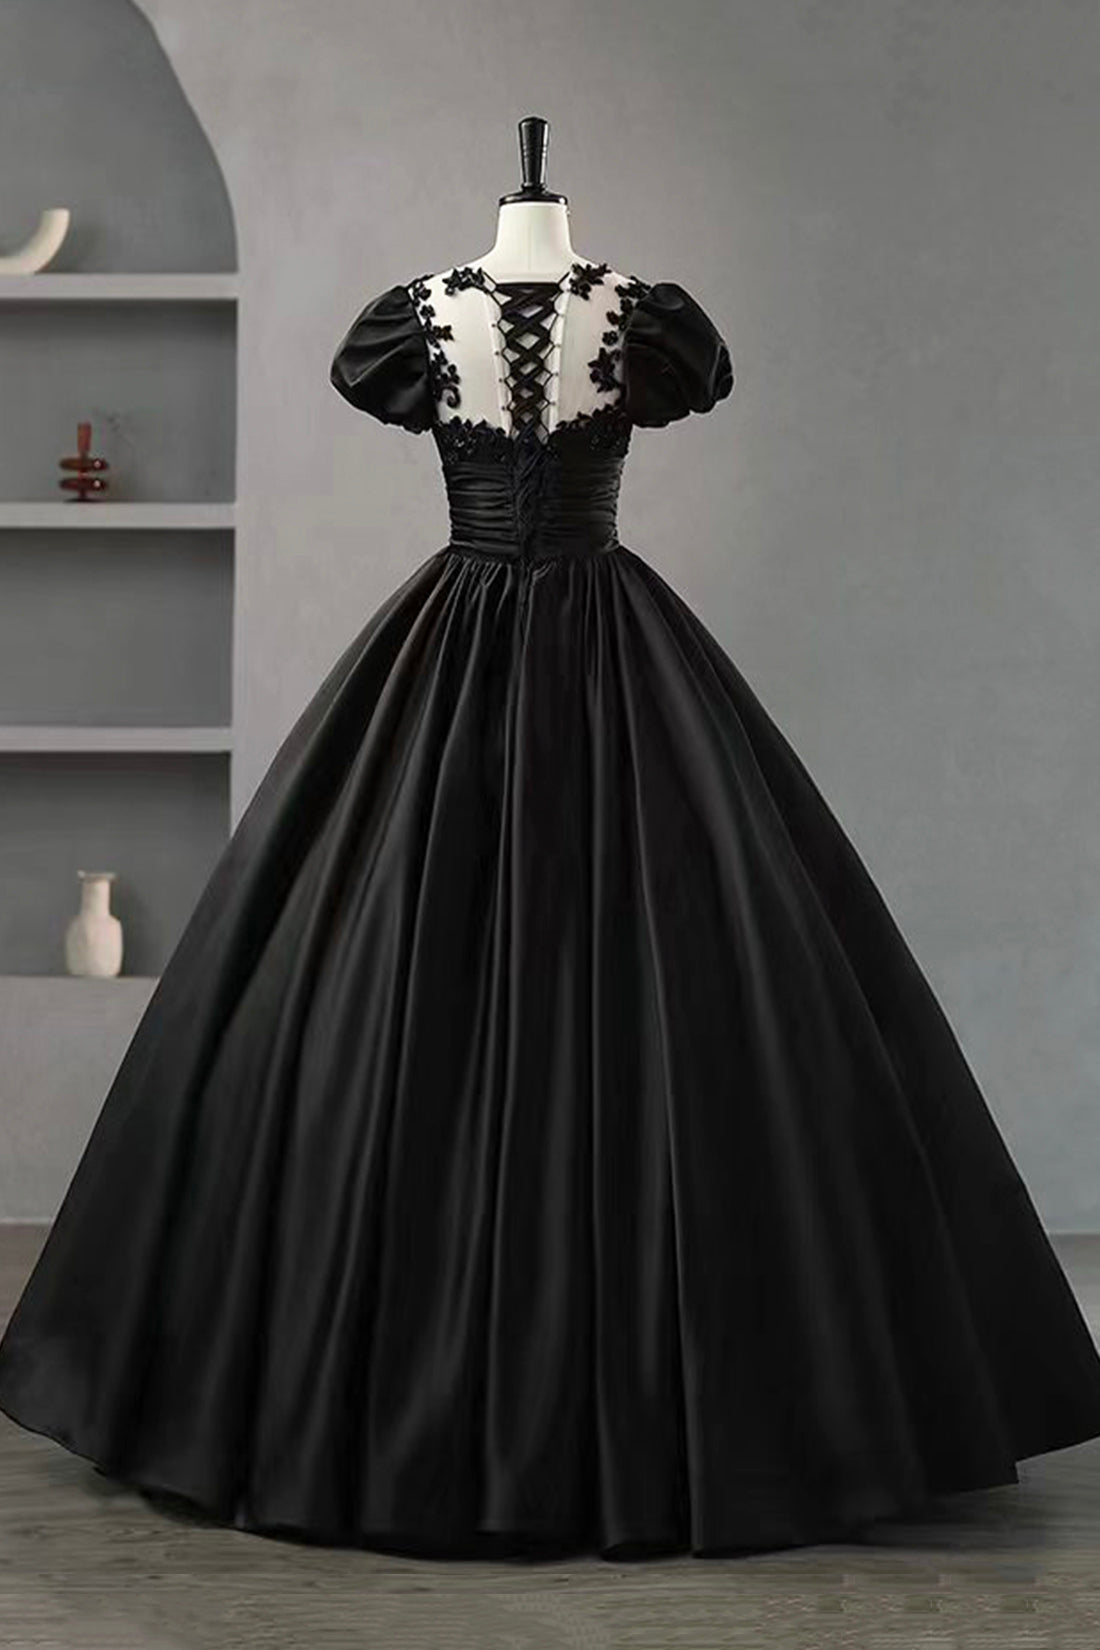 Black Satin Lace Long Prom Dress, A-Line Scoop Neckline Short Sleeve Evening Dress